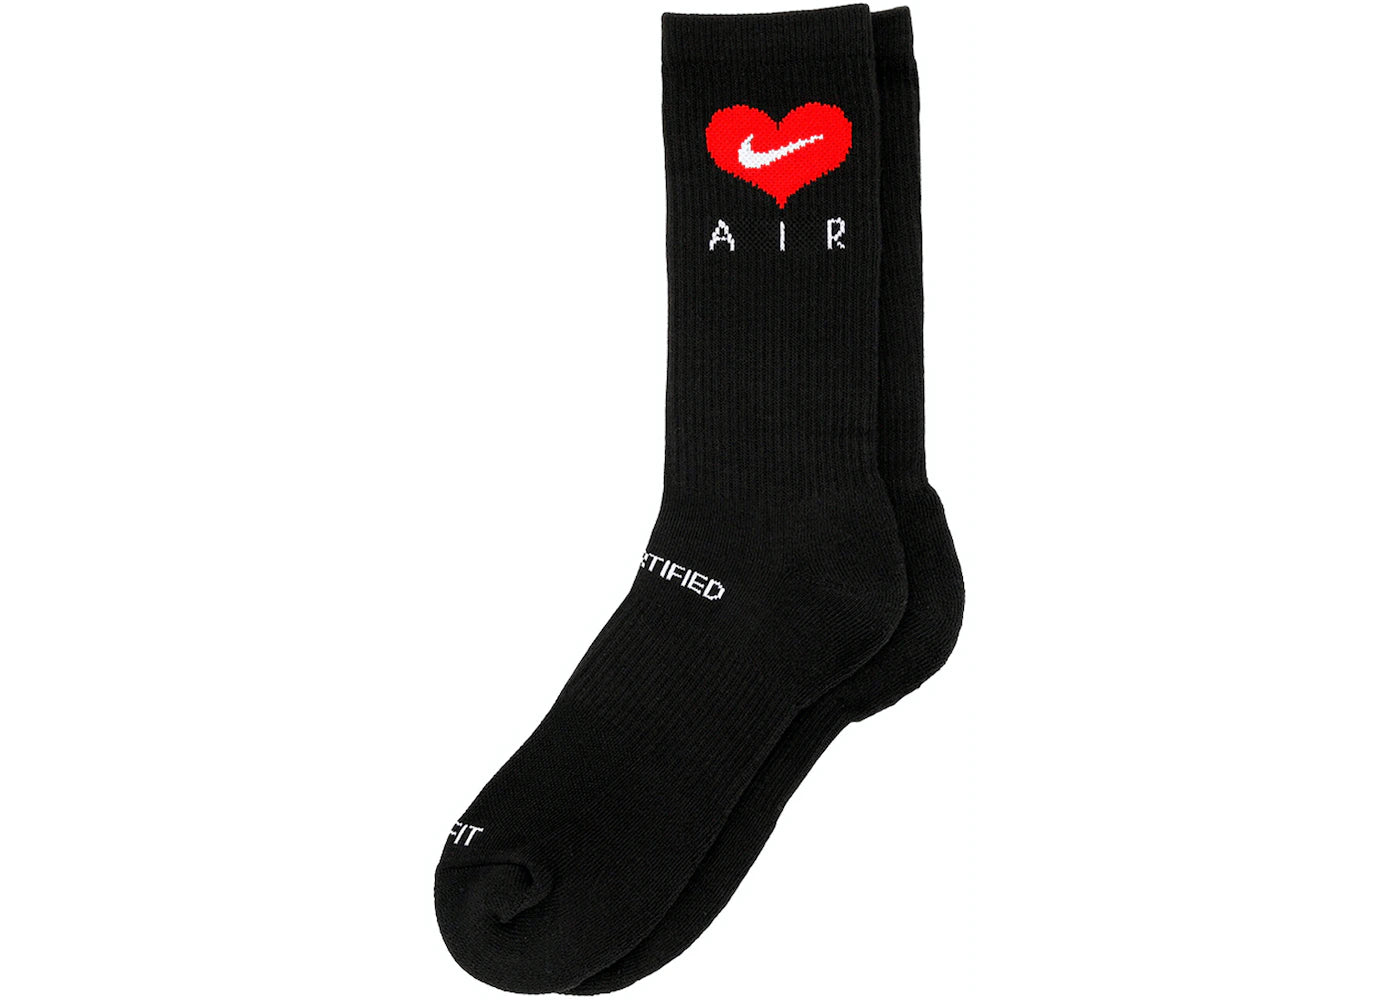 Nike Drake Certified Lover Boy Socks Black 3 Pack